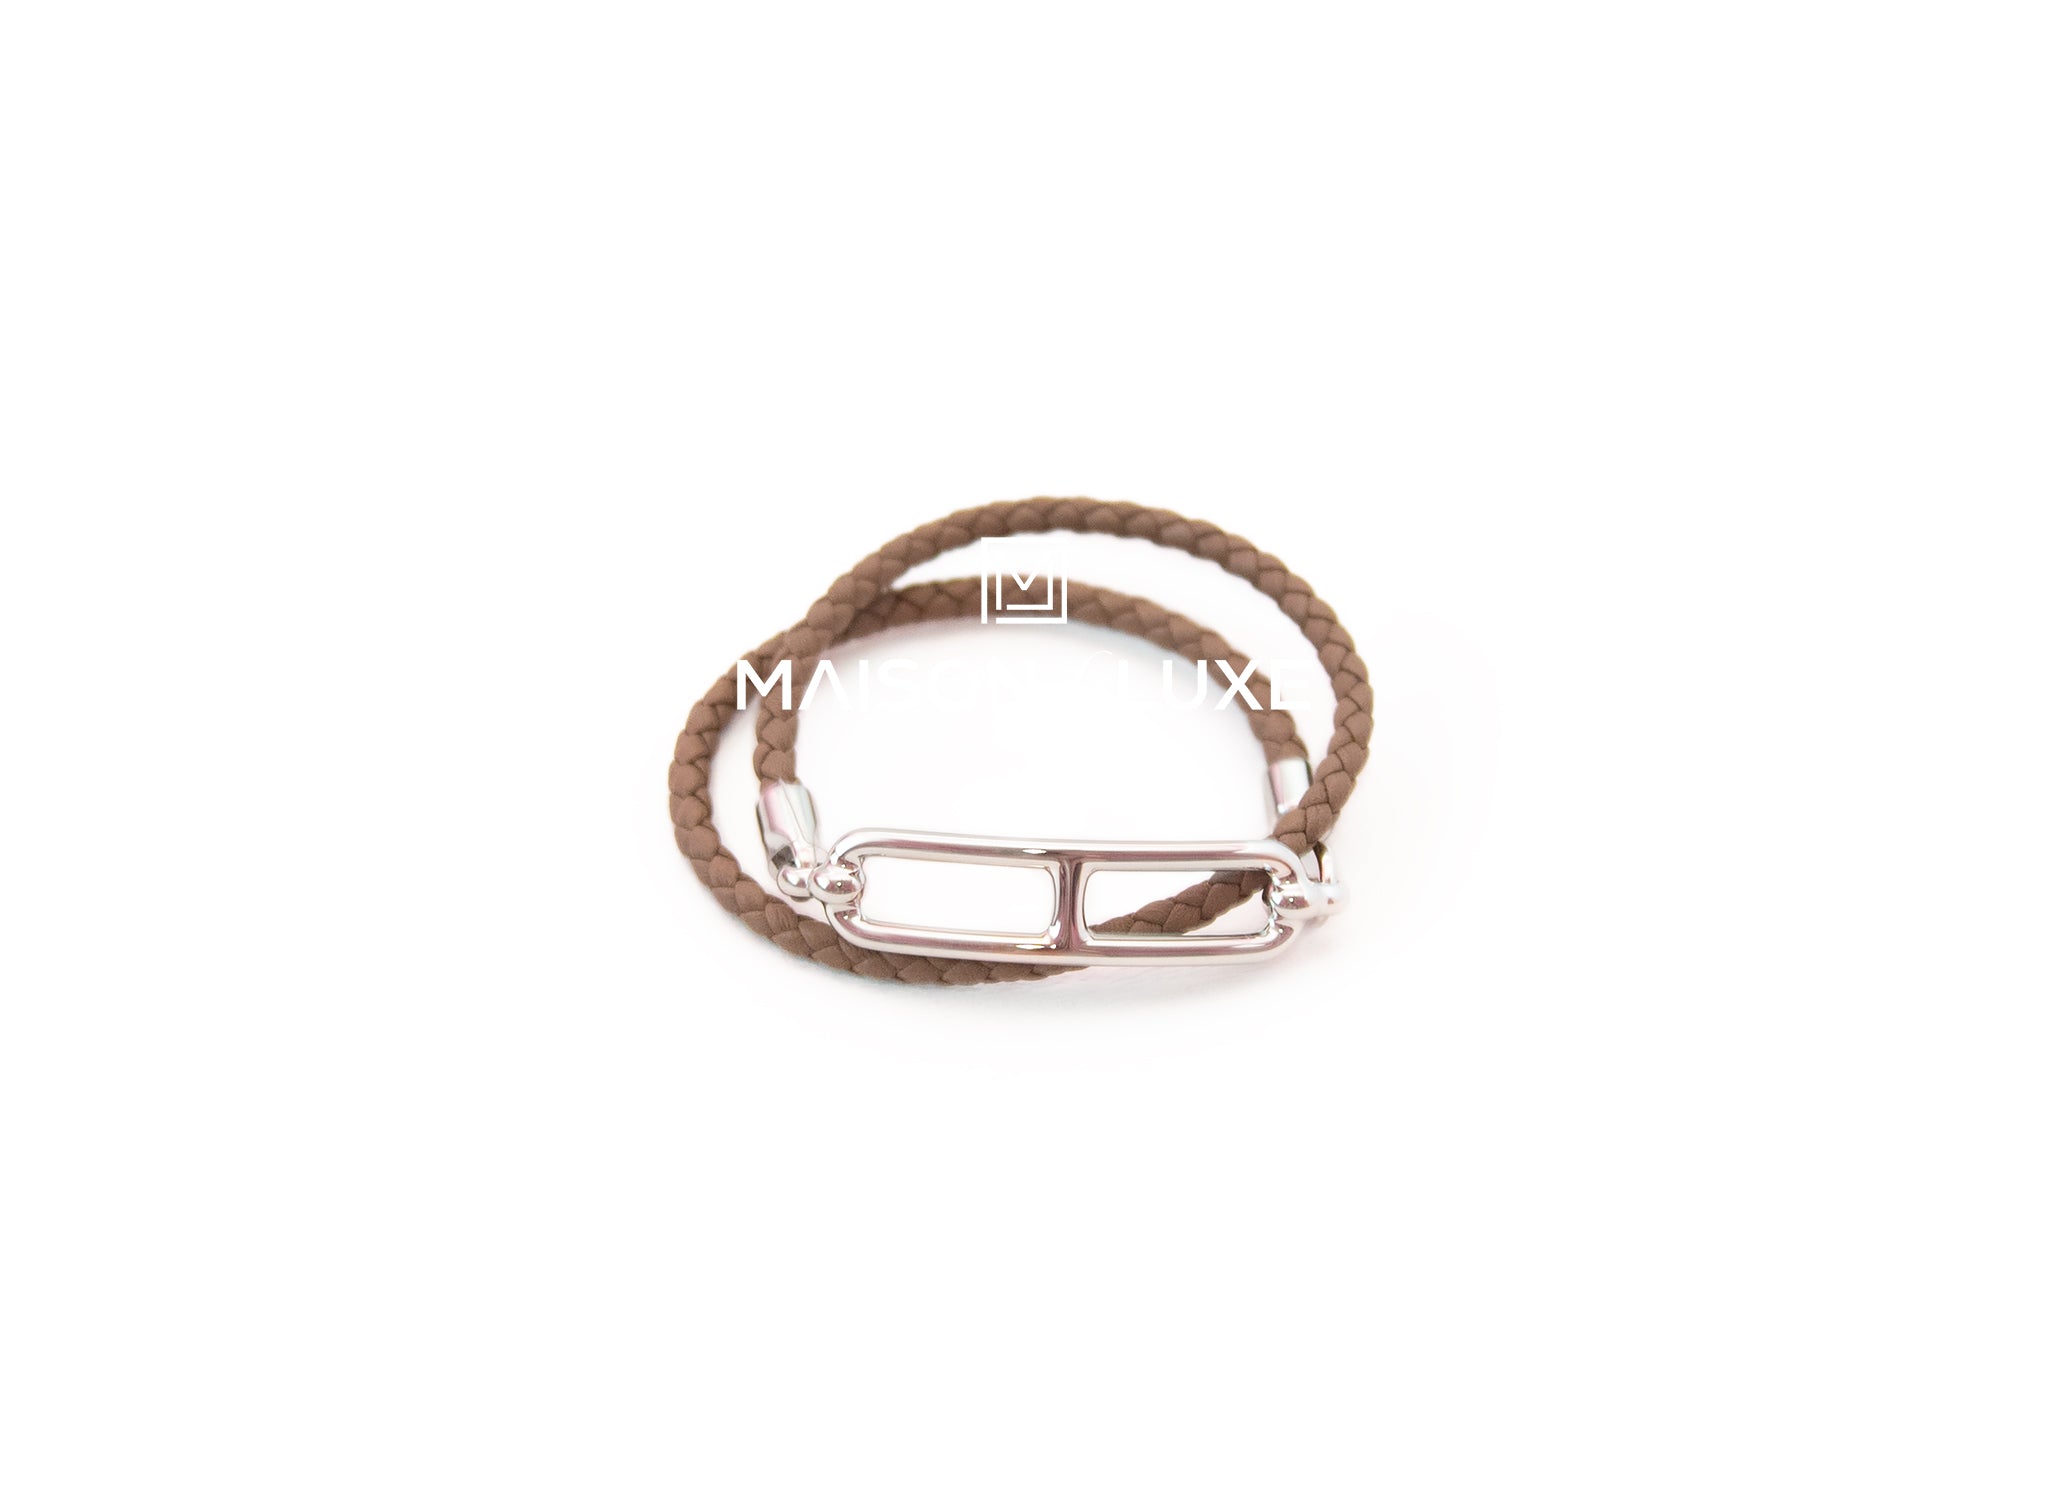 BNIB Hermes Collier De Chien 24 Bracelet T2 in Etoupe Epsom Leather with  Gold HW | eBay